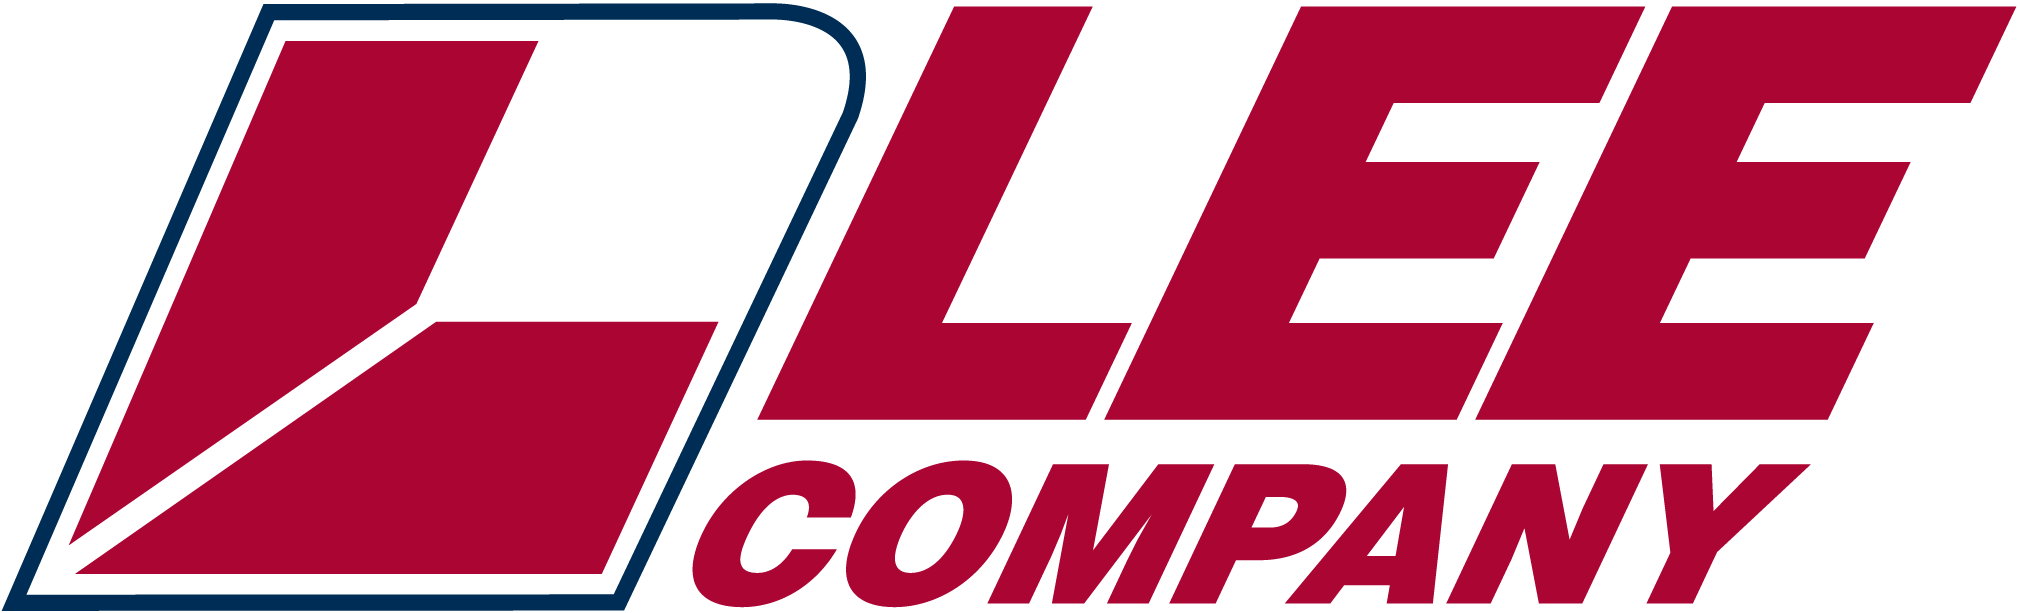 Lee Company